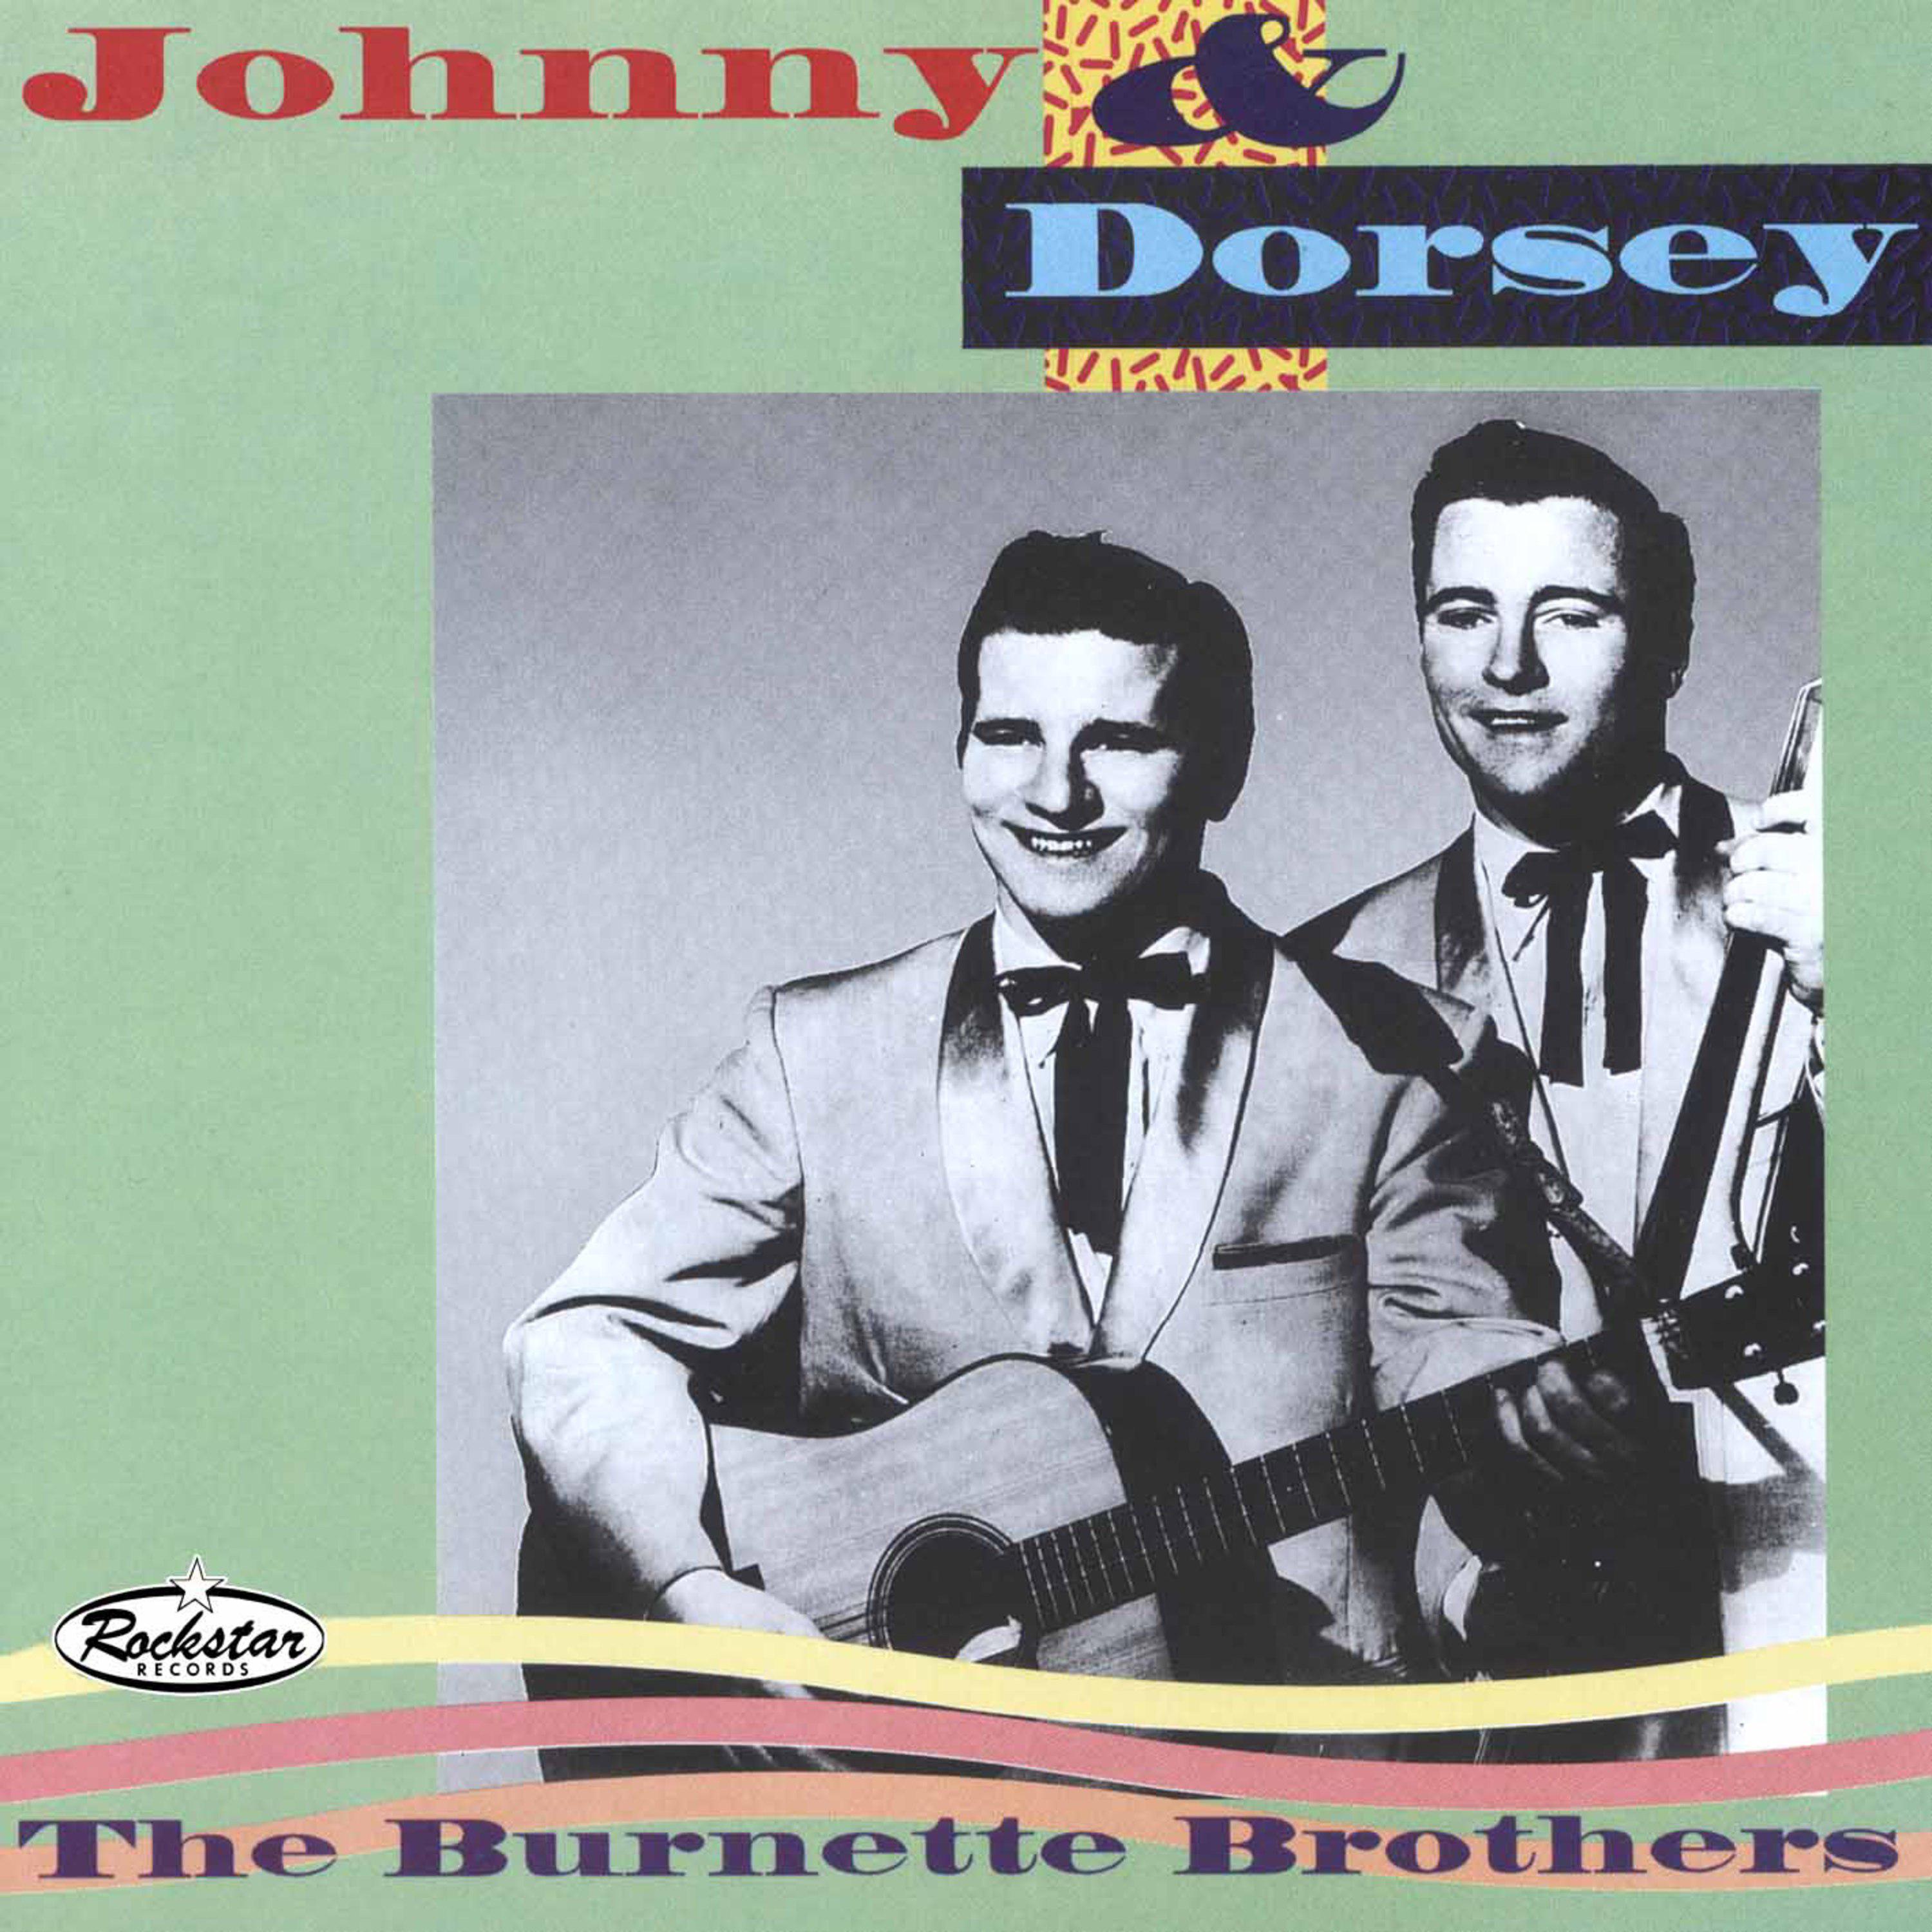 Johnny & Dorsey - The Burnette Brothers